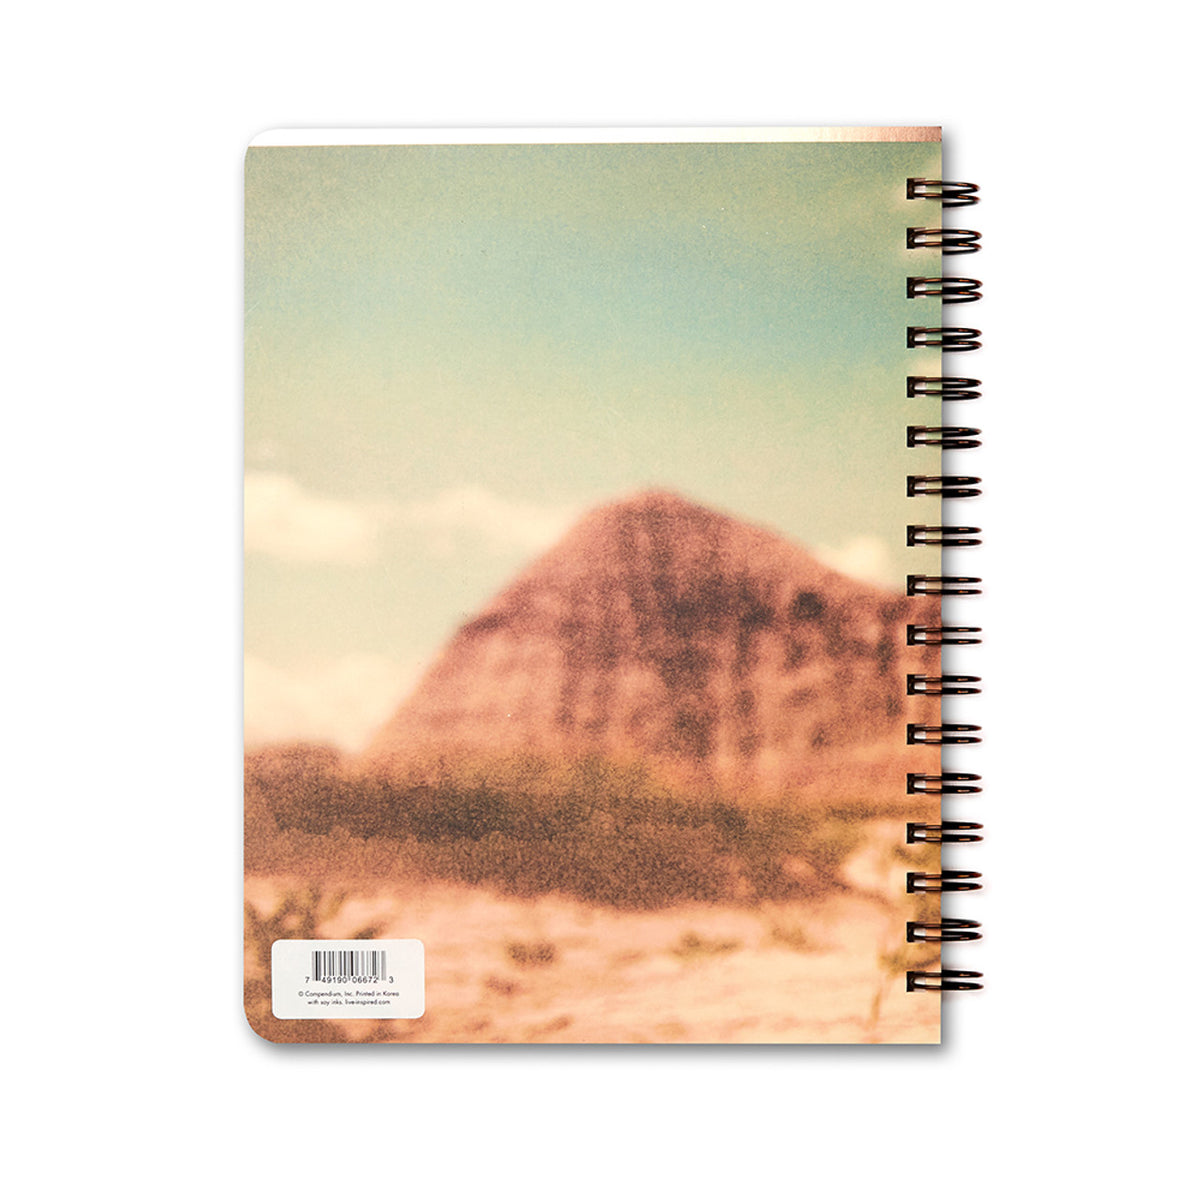 Back notebook cover - desert landscape